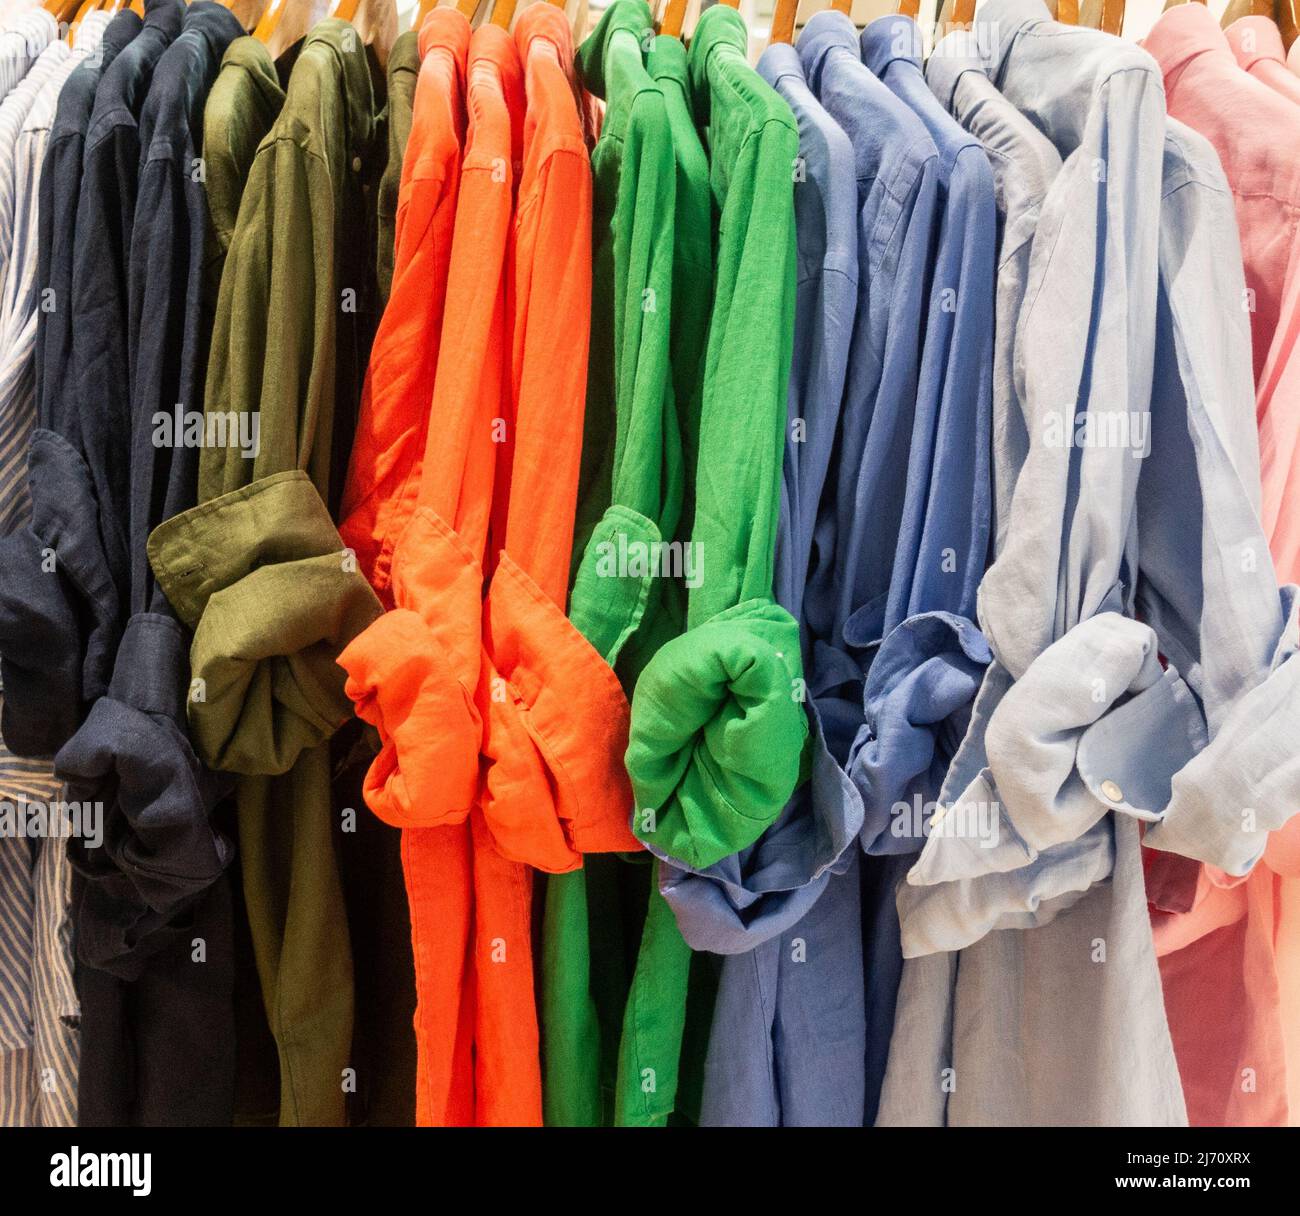 wooden-t-shirt-hangers-in-fashion-apparel-store-picjumbo-com – Elizabeth  Smith Knits